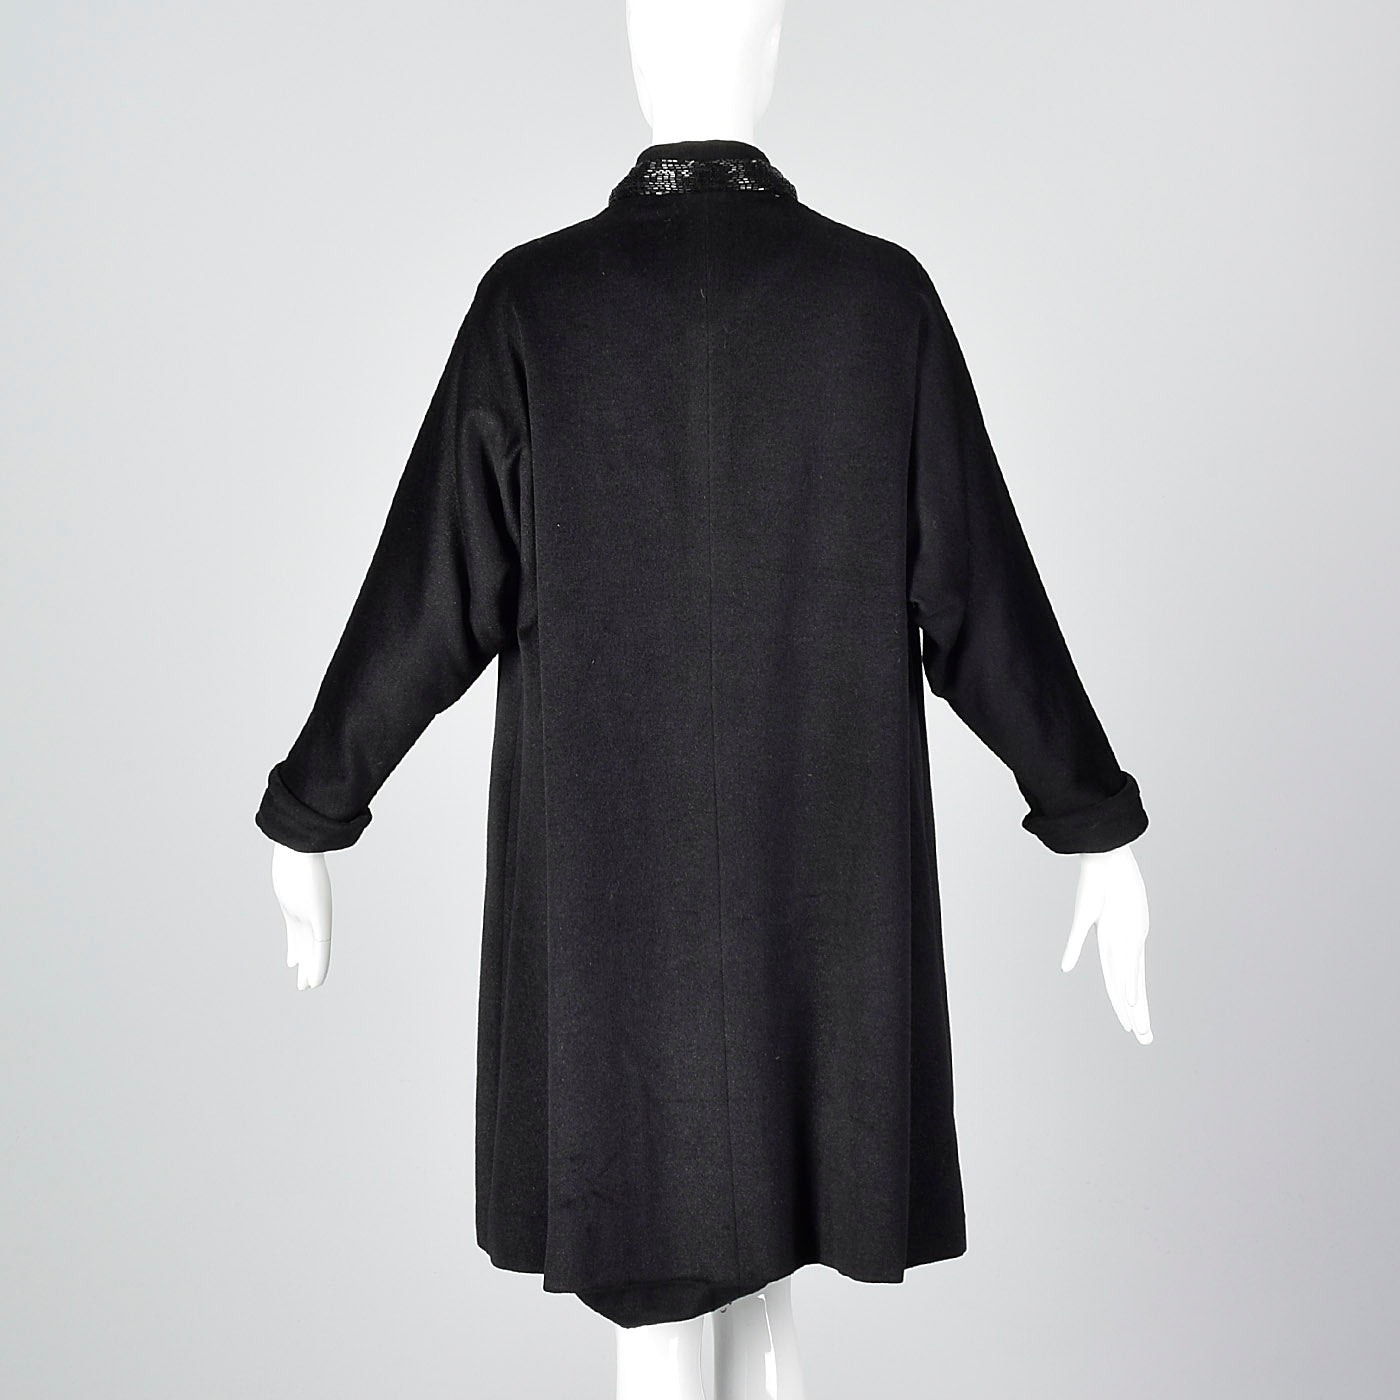 1950s Black Wool Swing Coat with Beaded Collar